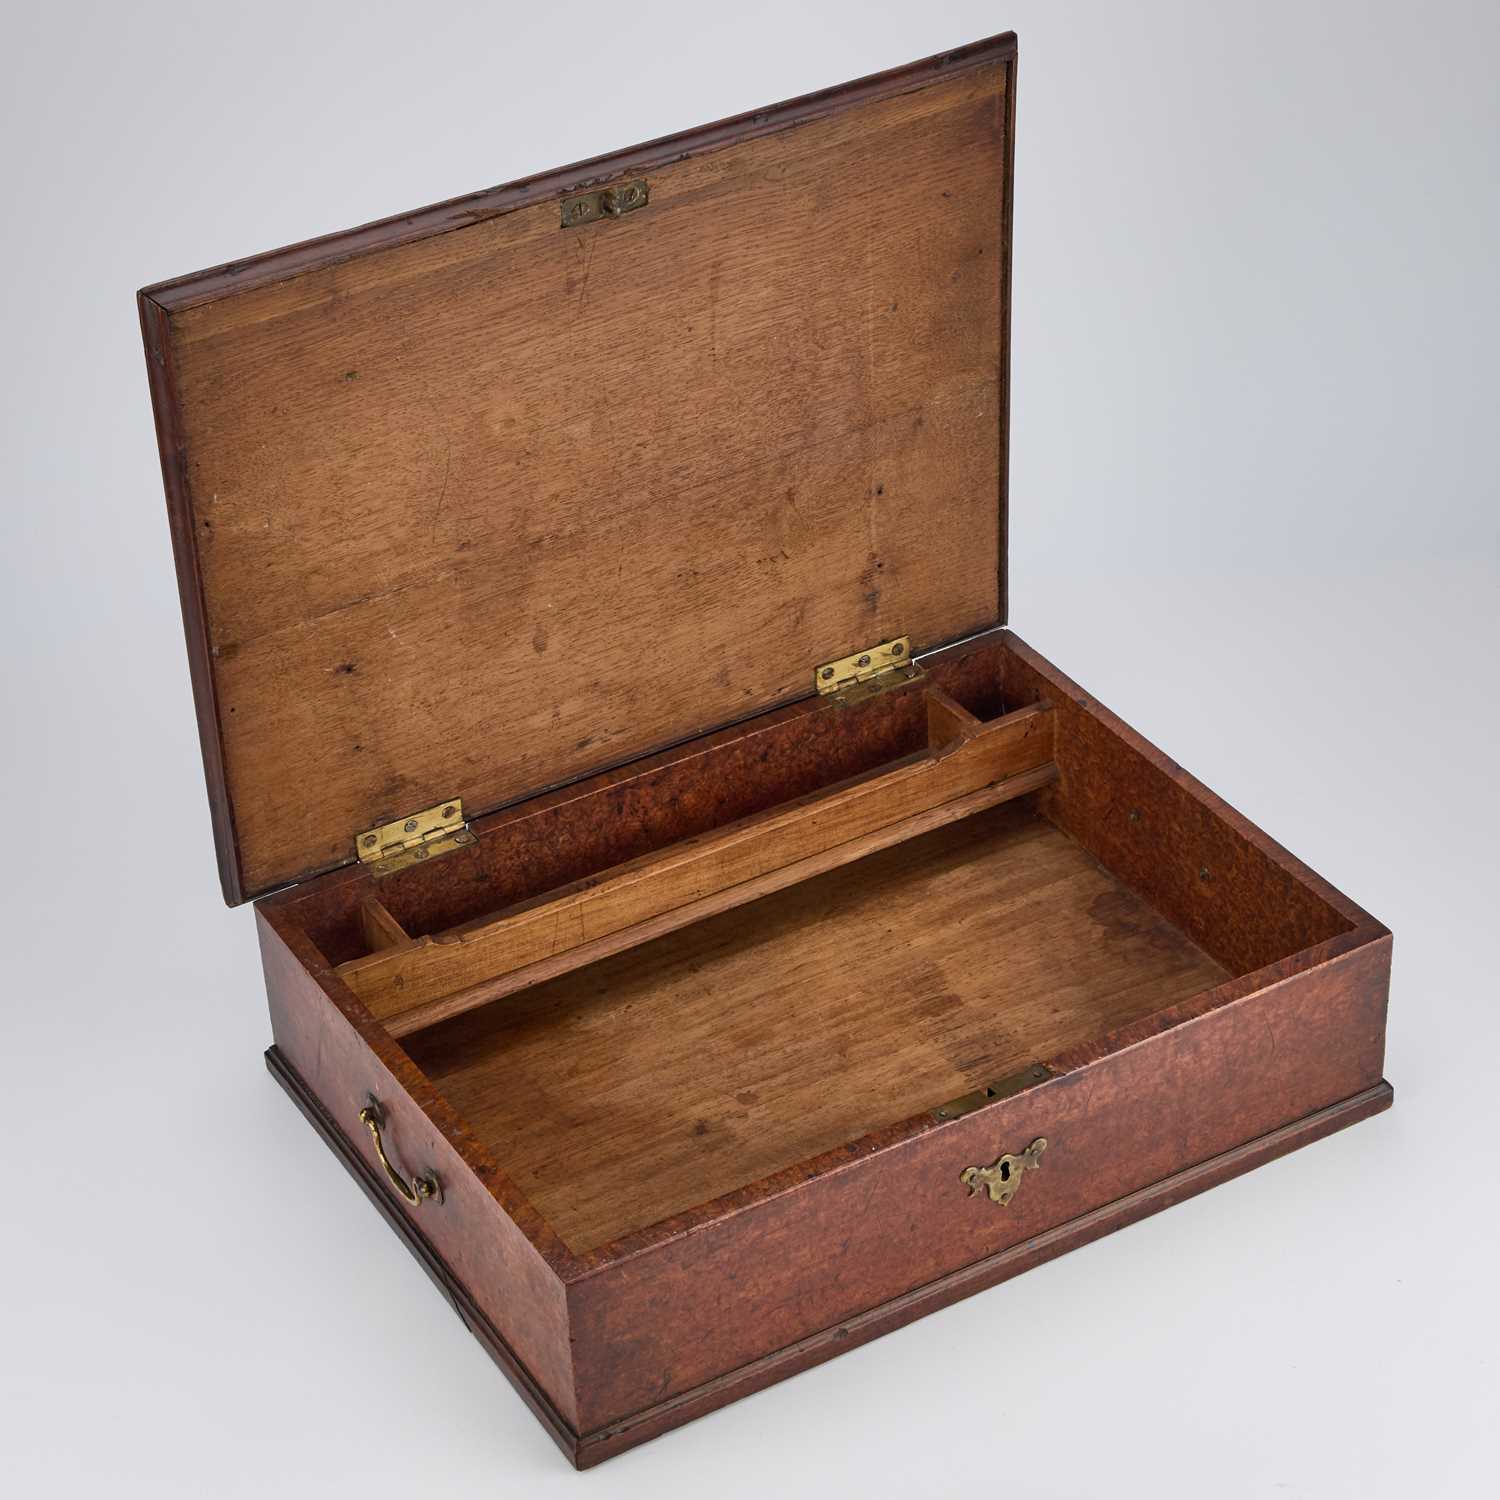 AN 18TH CENTURY BURR WOOD BOX - Image 2 of 3